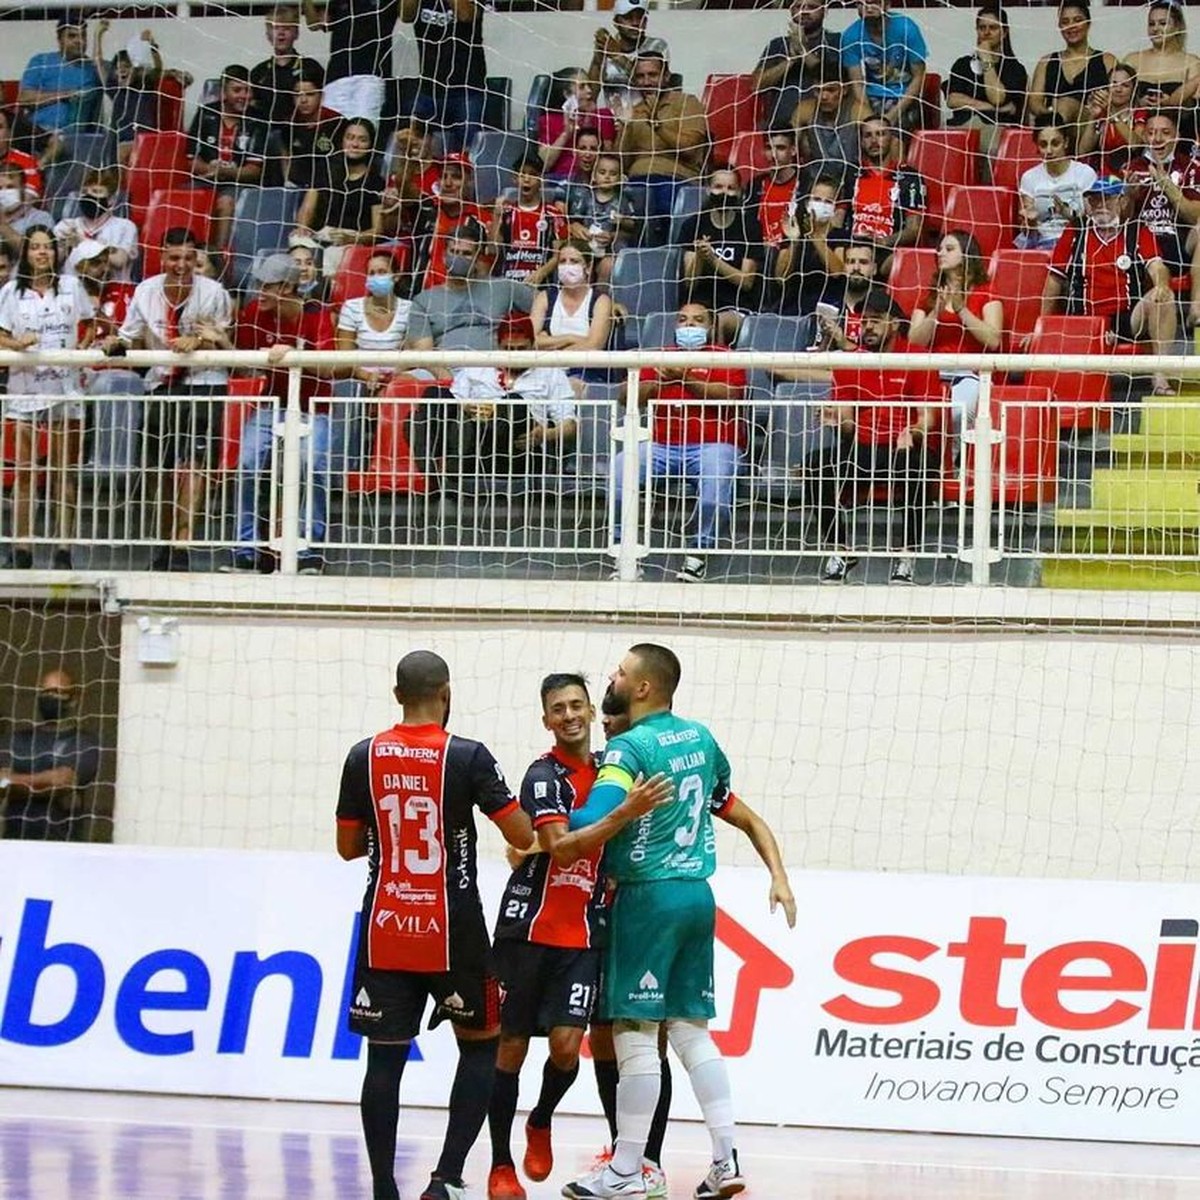 AO VIVO - JEC/Krona Futsal x Carlos Barbosa